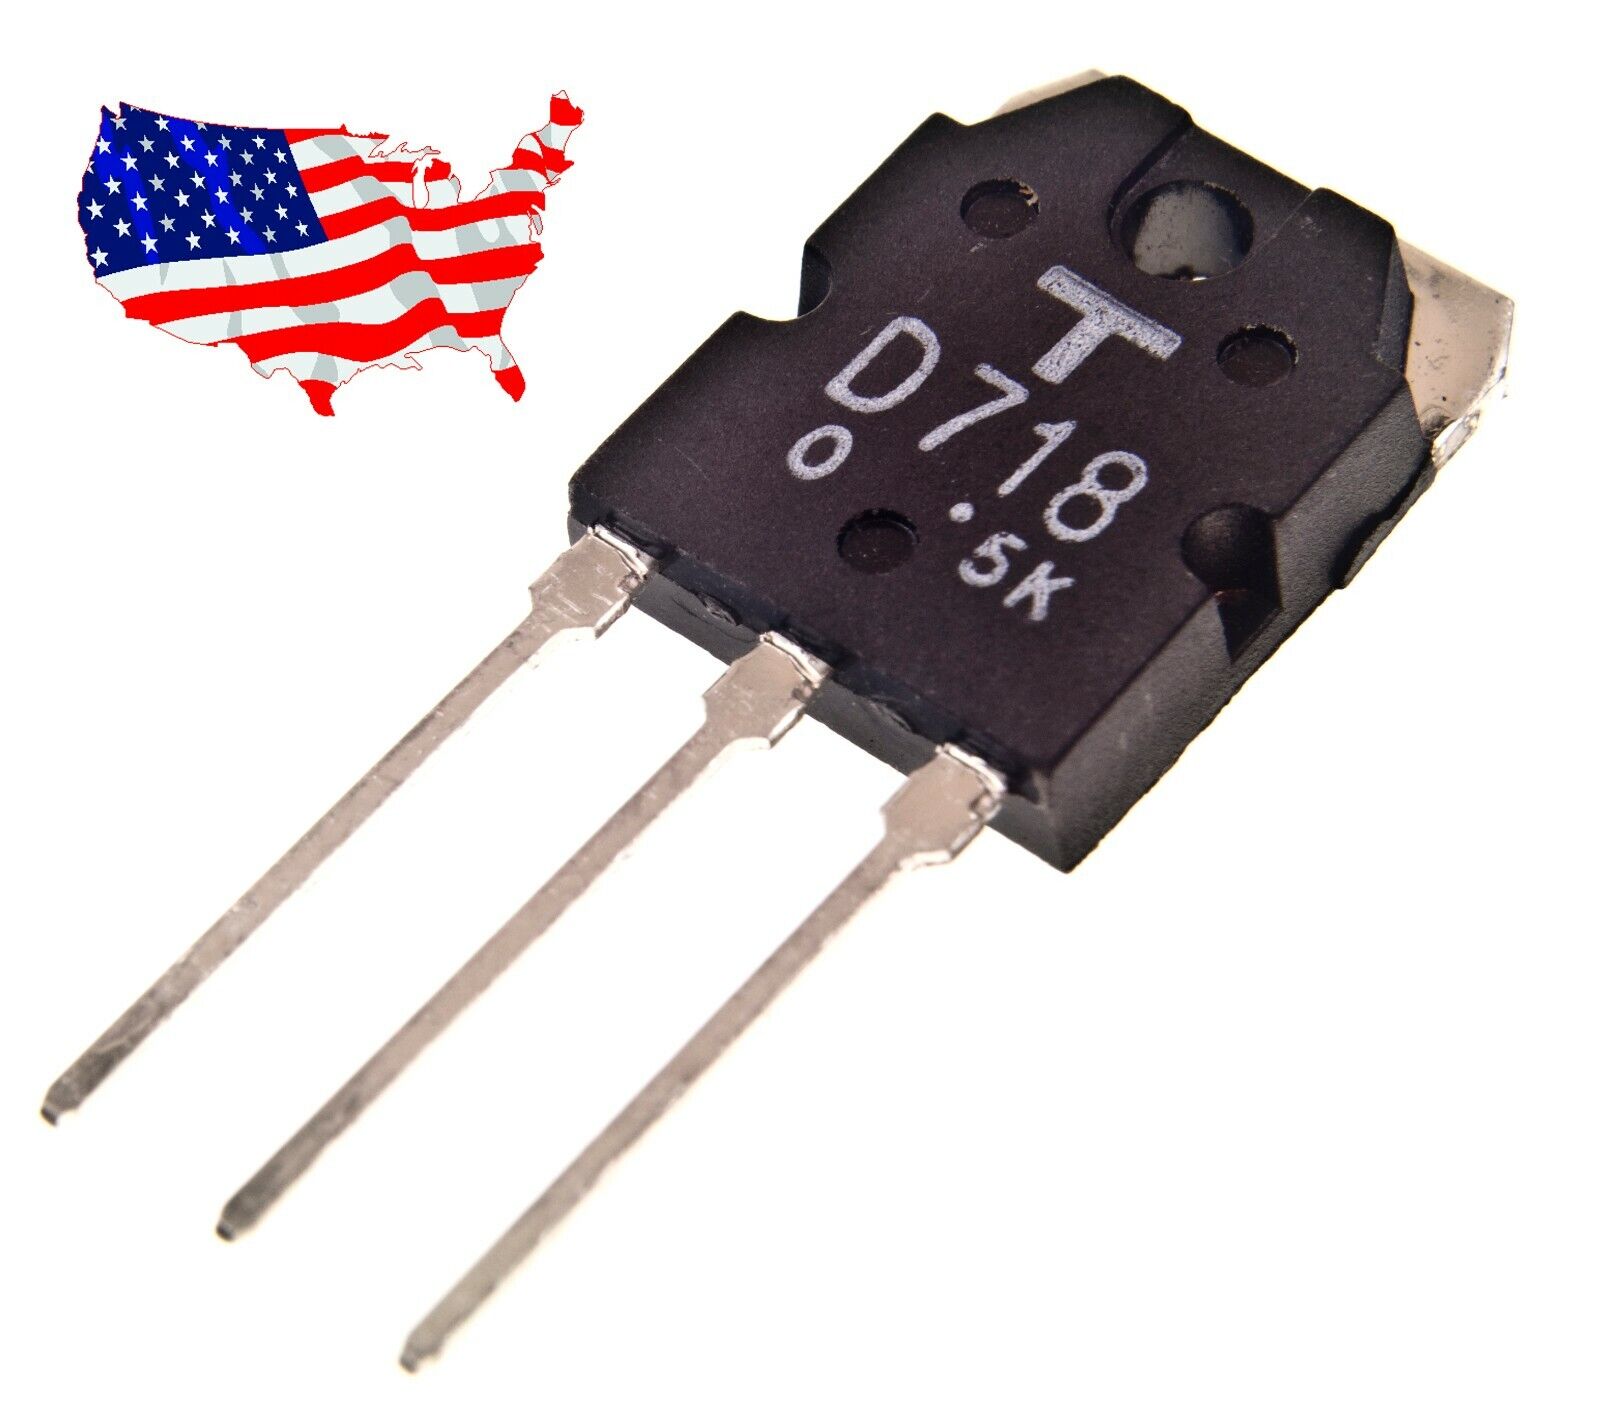 ' 2SD718 -O (2 pcs) Transistors - from USA